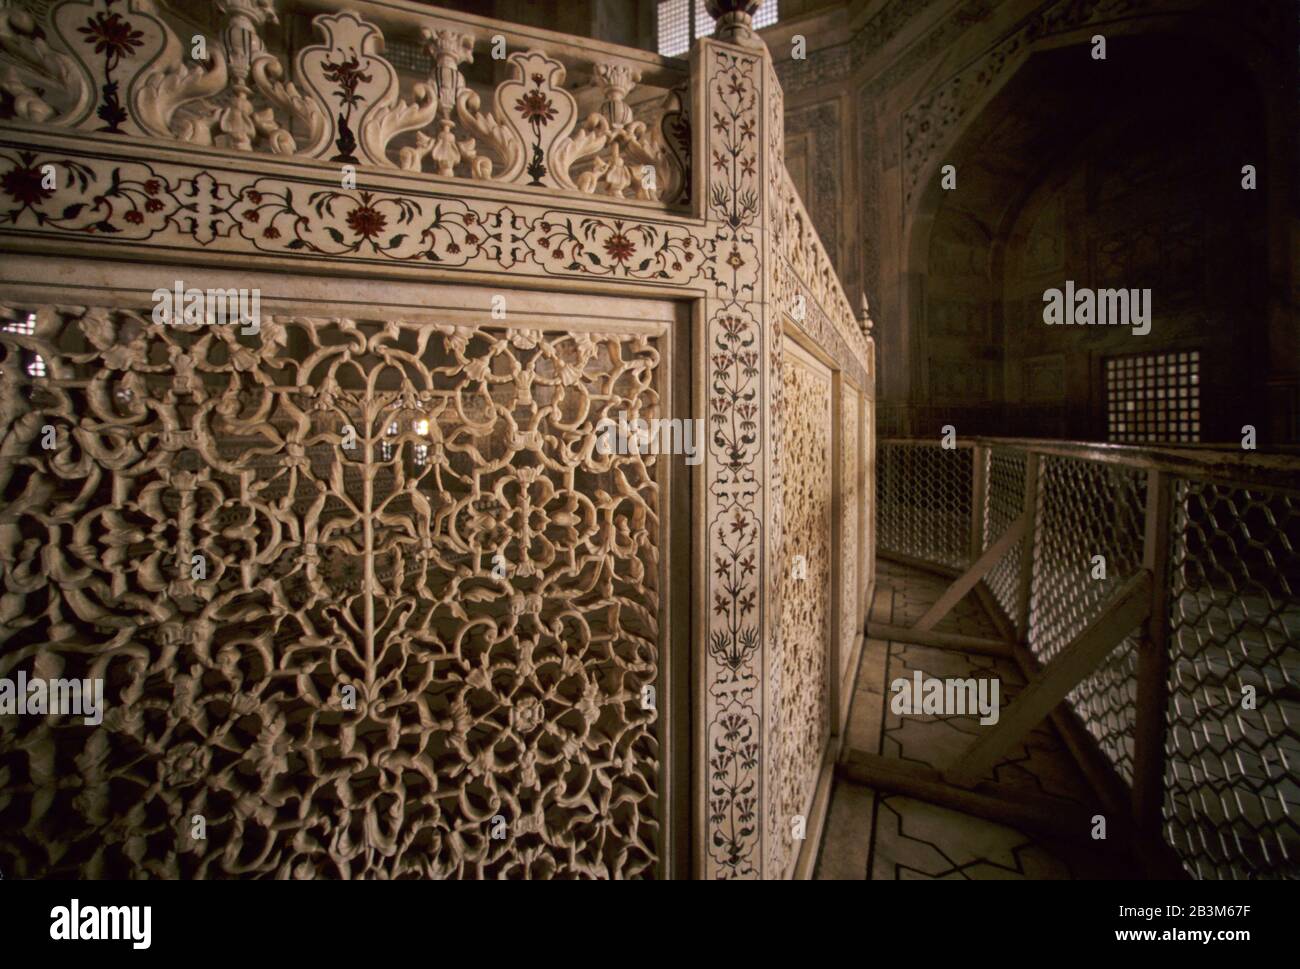 inside jali works of Taj mahal Seventh Wonder of The World, Agra, Uttar Pradesh, India, Asia Stock Photo